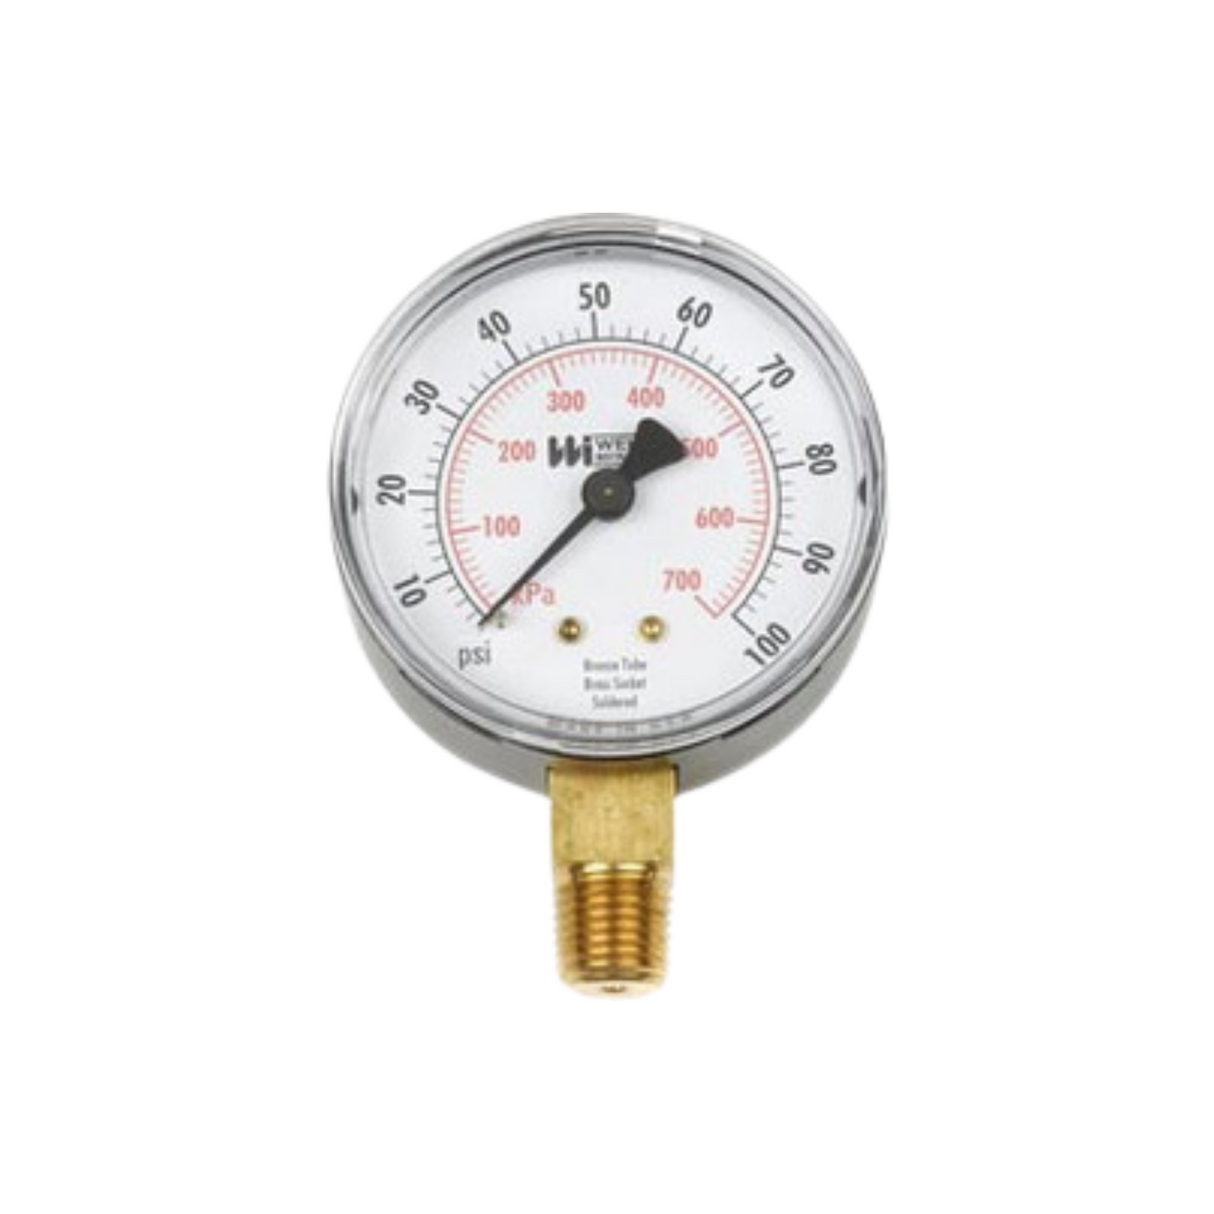 Weiss Instruments TL40-30 General Purpose Pressure Gauge